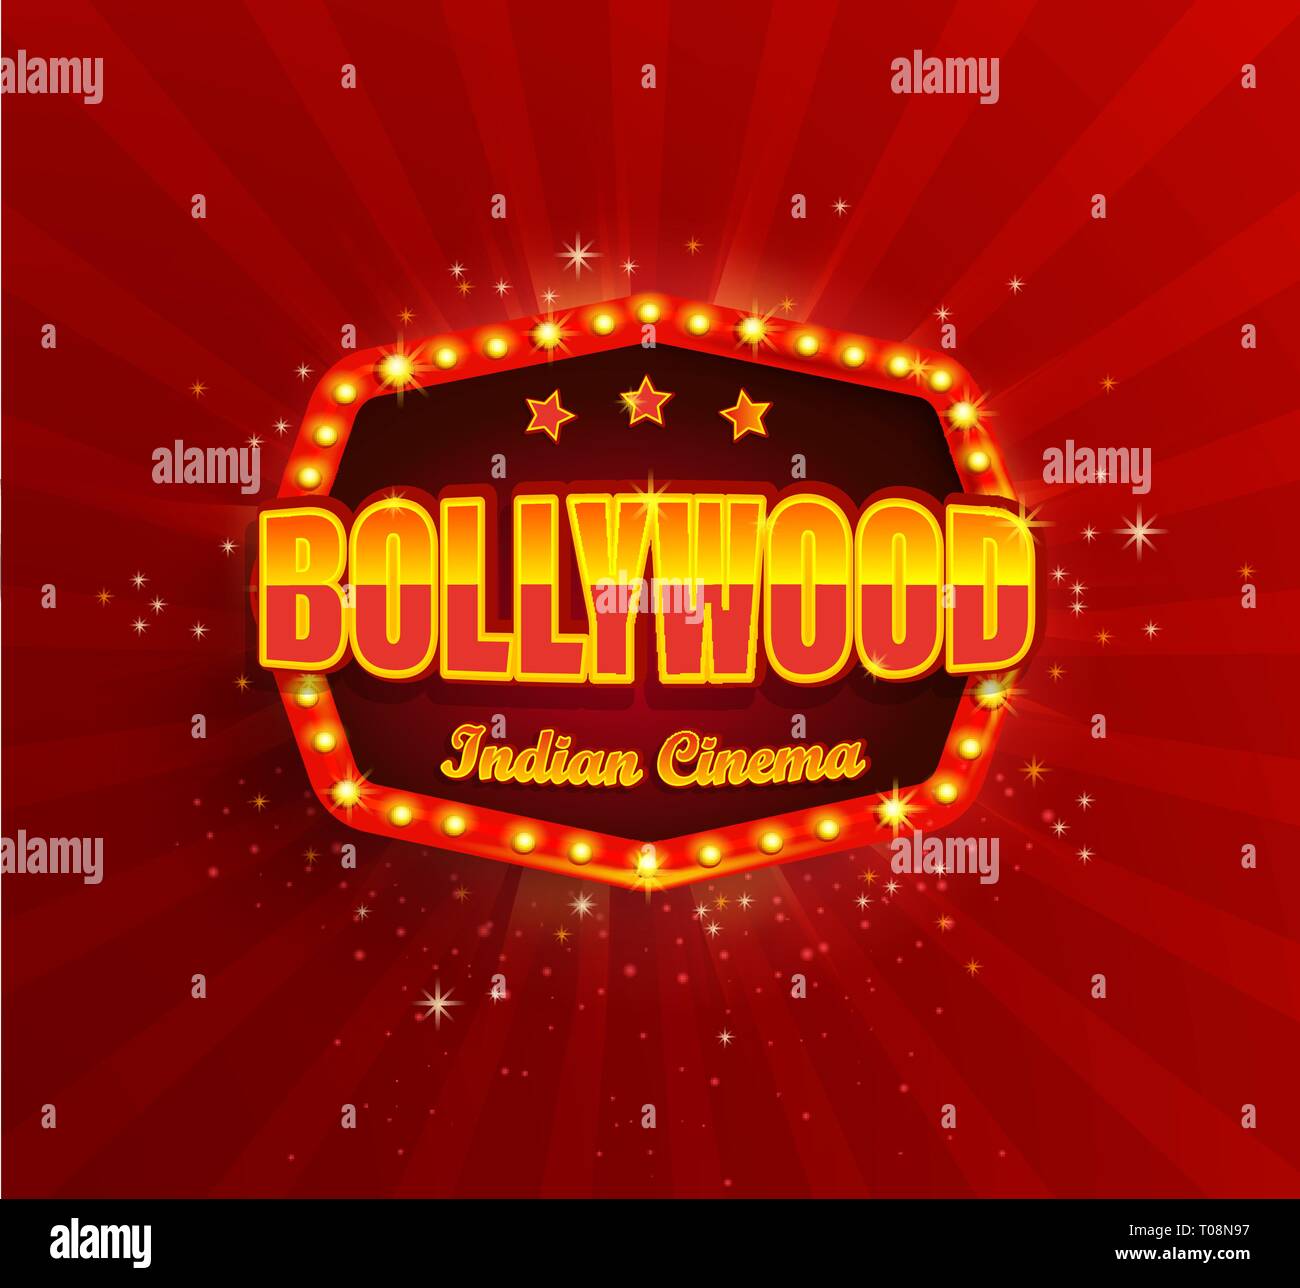 Bollywood Indian Cinema Film Banner Stock Vector